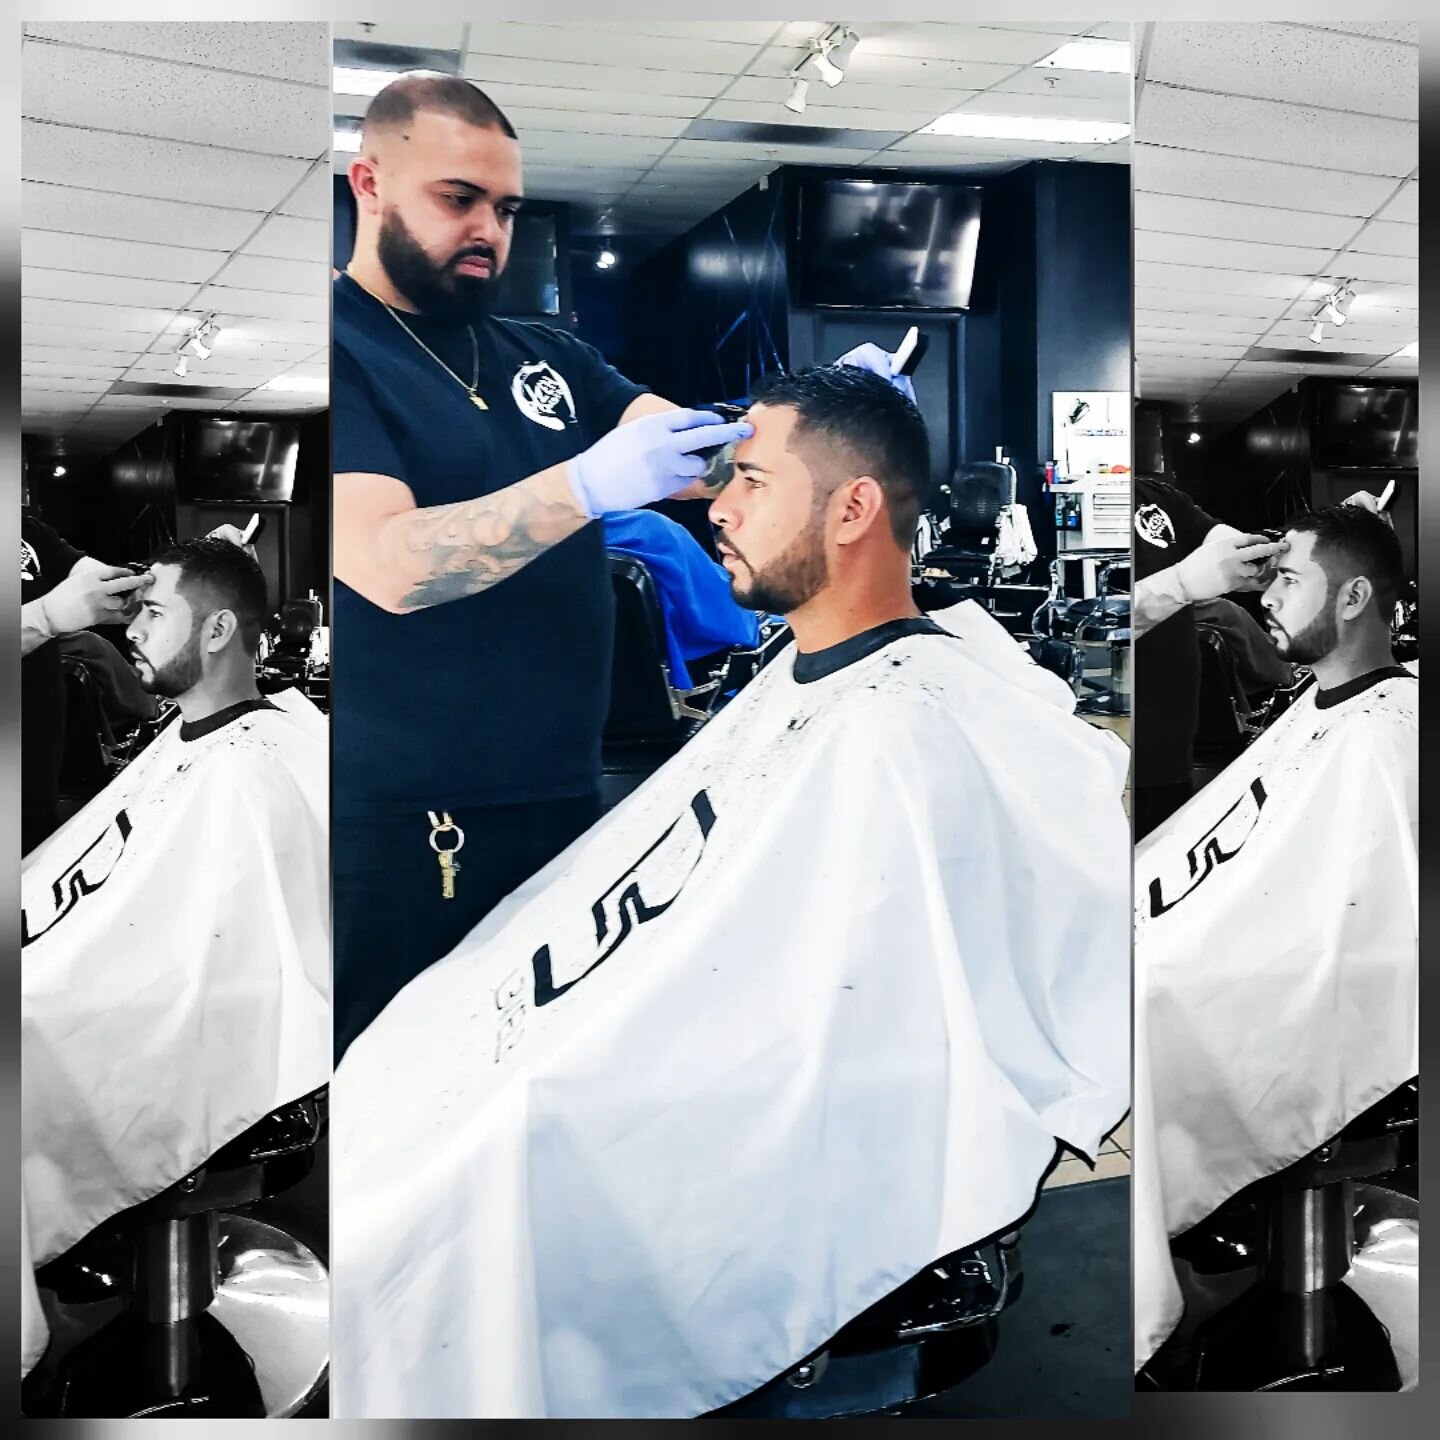 Zen Barbers
8121 Vineland Ave
Orlando, FL 32821
407-778-1616

***************************+
#ZenBarbers #Barberlife #BarbersAreArtist #BarberingISAnArt #OrlandoBarberShop #Disney #DisneySprings #Orlando #DisneyWorld #Fashion #BeforeAndAfter #BeforeAnd